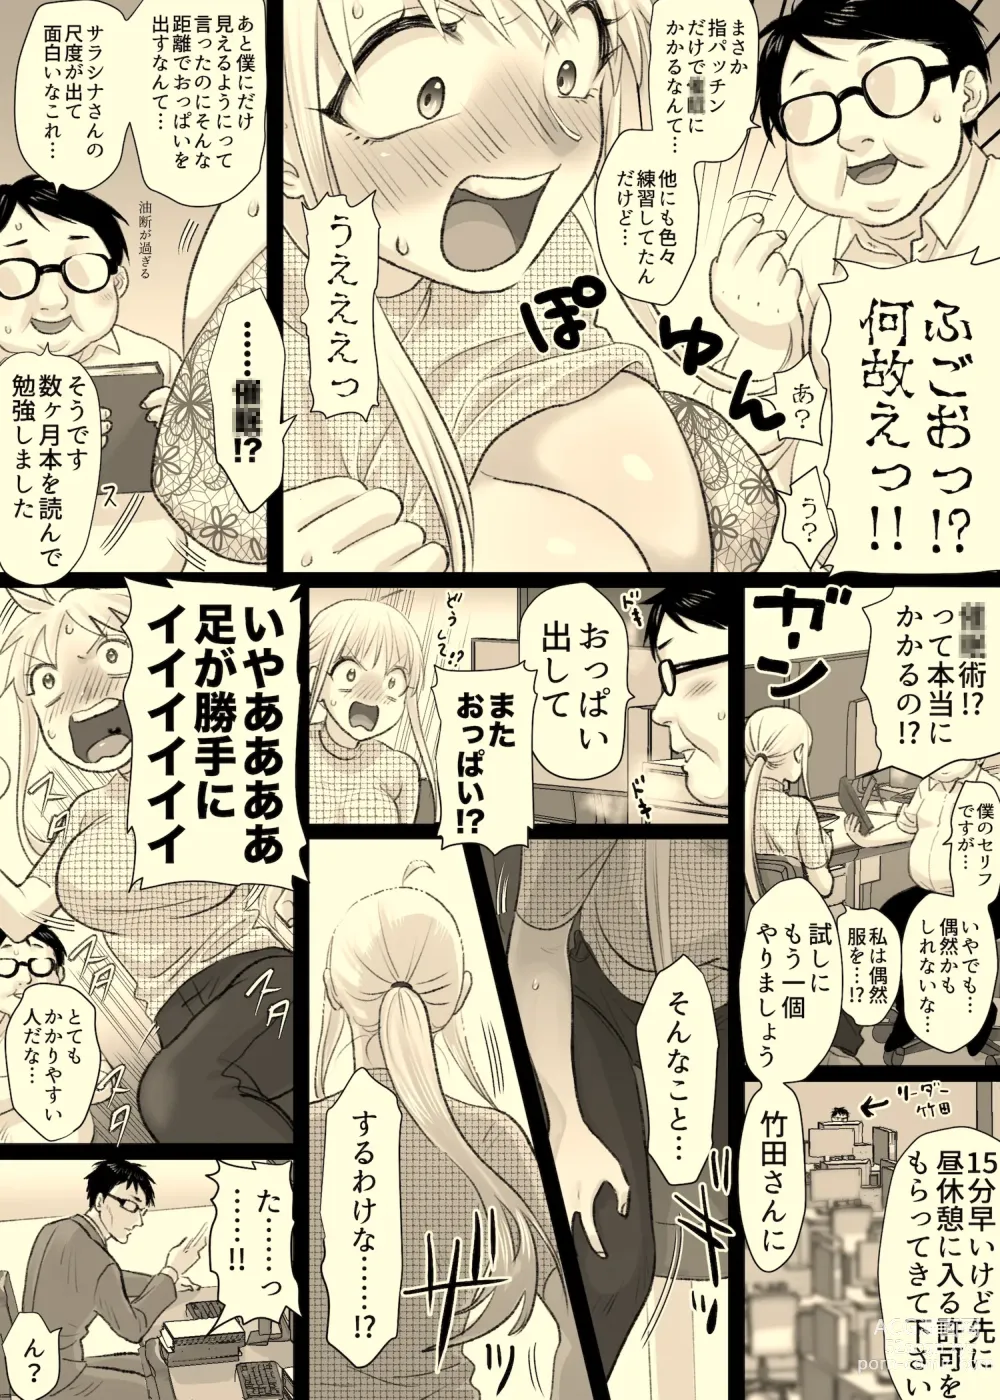 Page 2 of doujinshi Hi Genjitsu